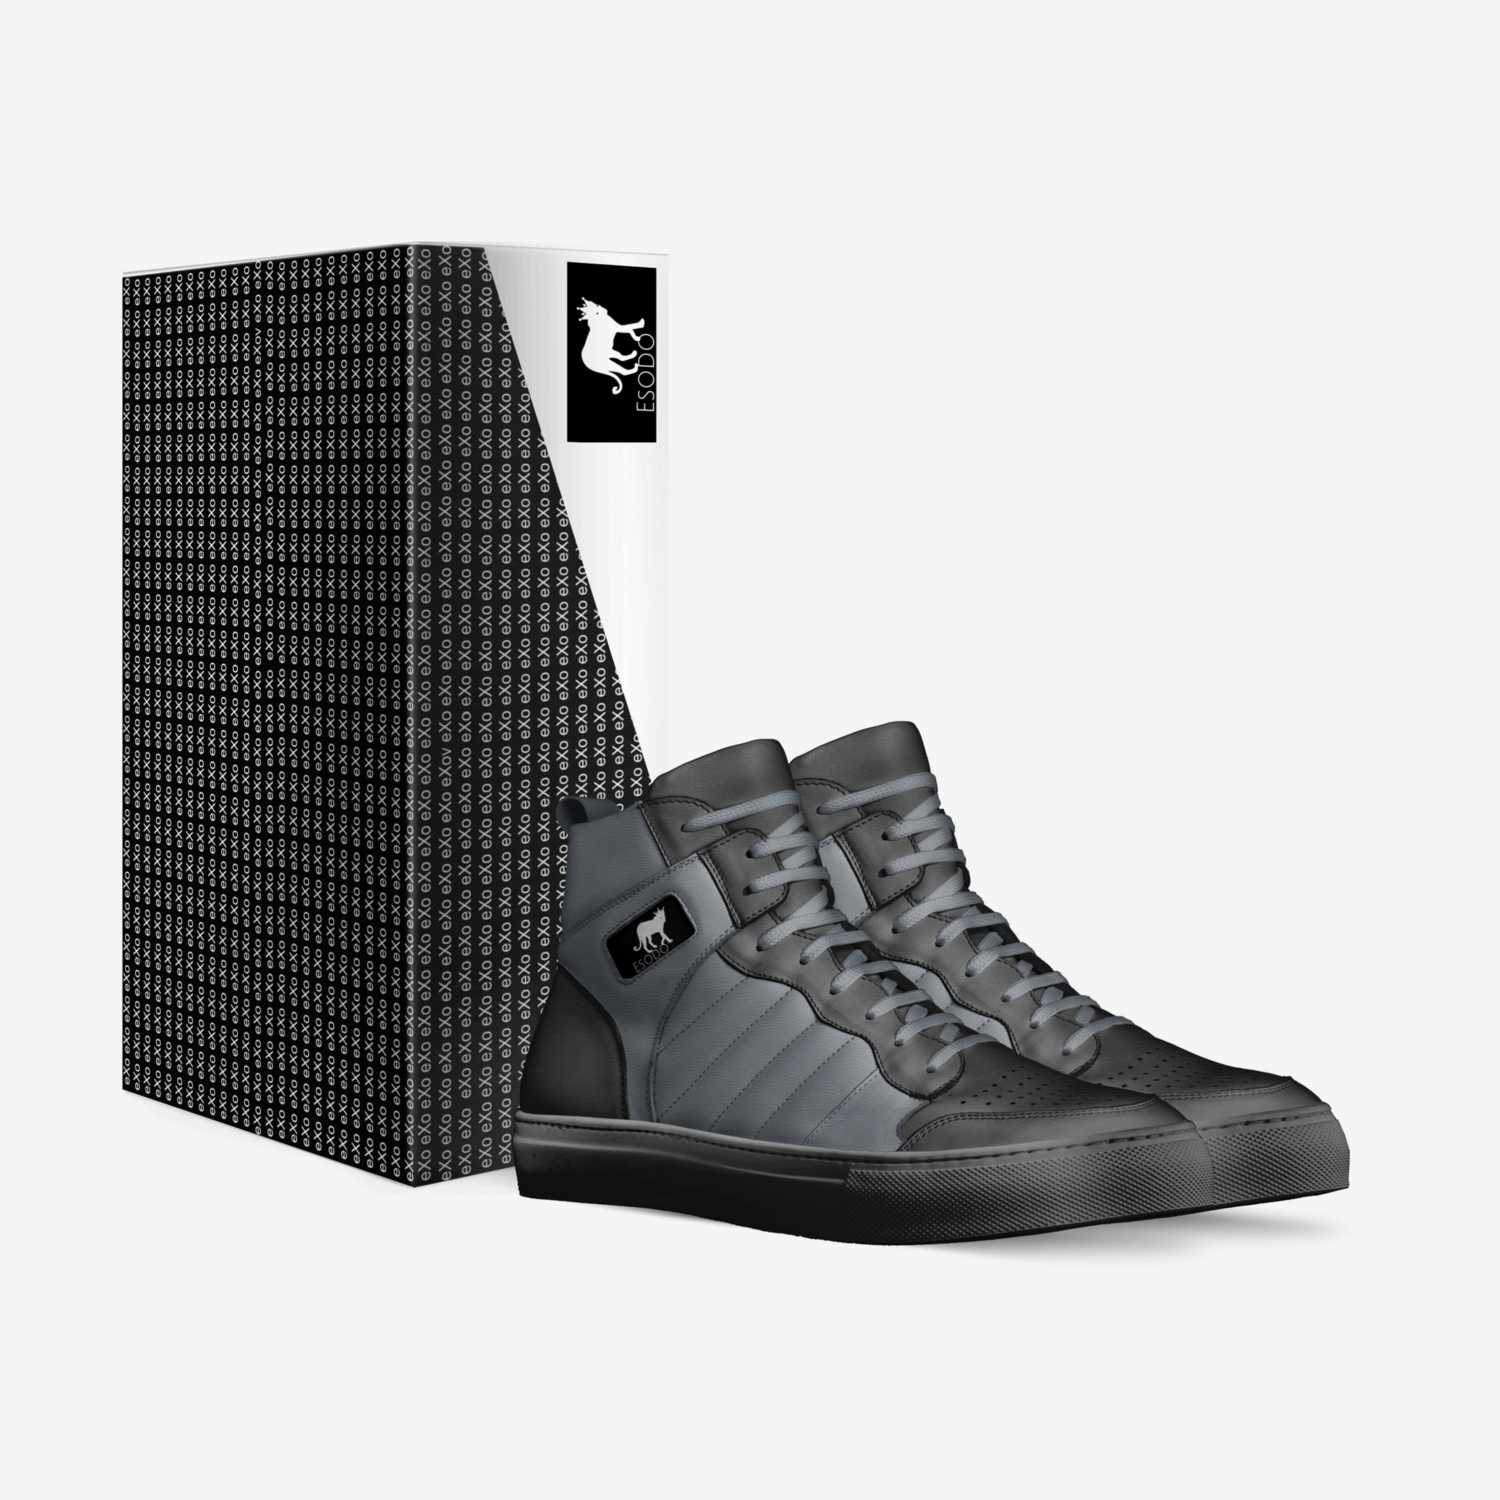 Esodo custom made in Italy shoes by Arthur Silva Pimenta | Box view